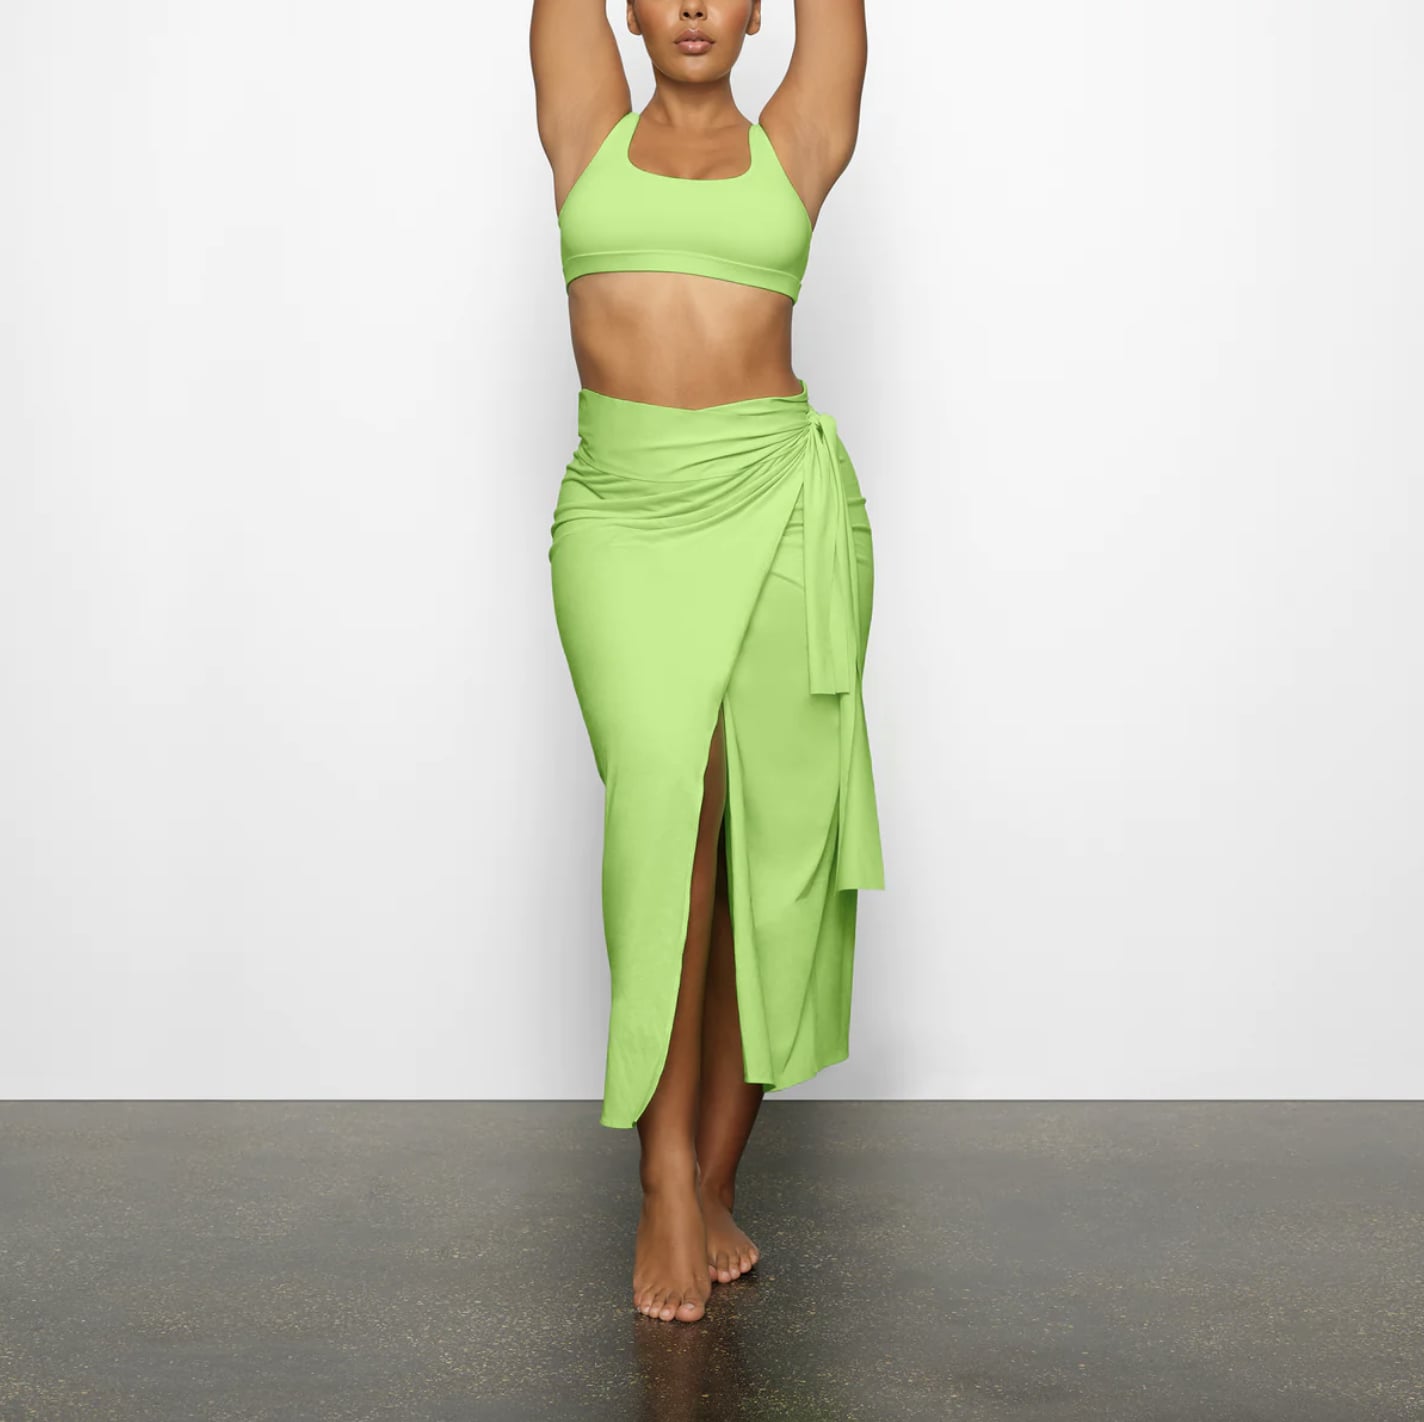 Jessica Simpson's Lime-Green Skims Bikini on Instagram